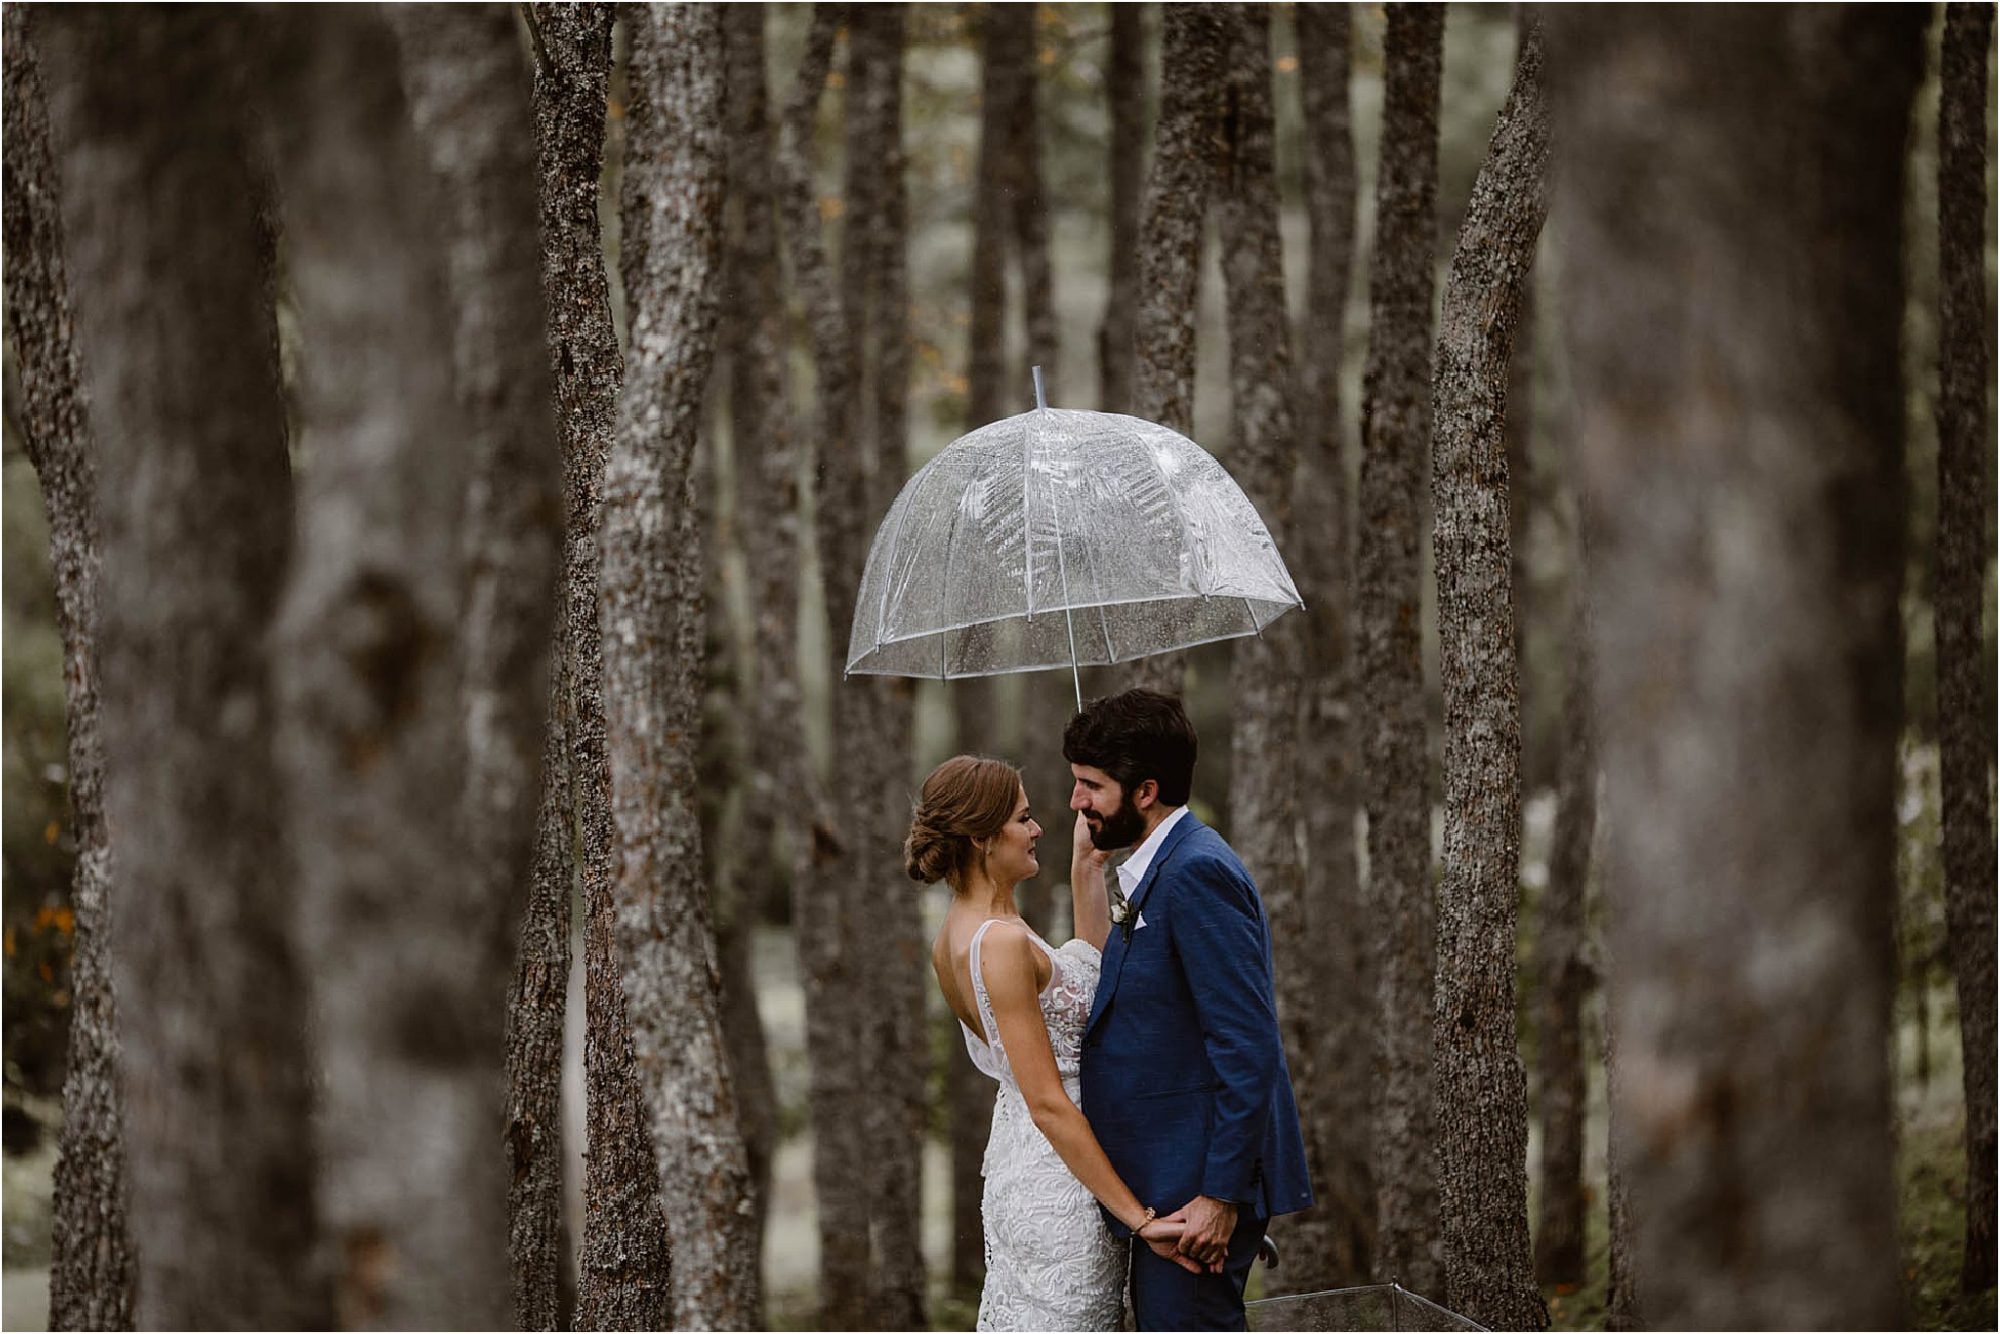 bride and groom standing in woods with umbrella